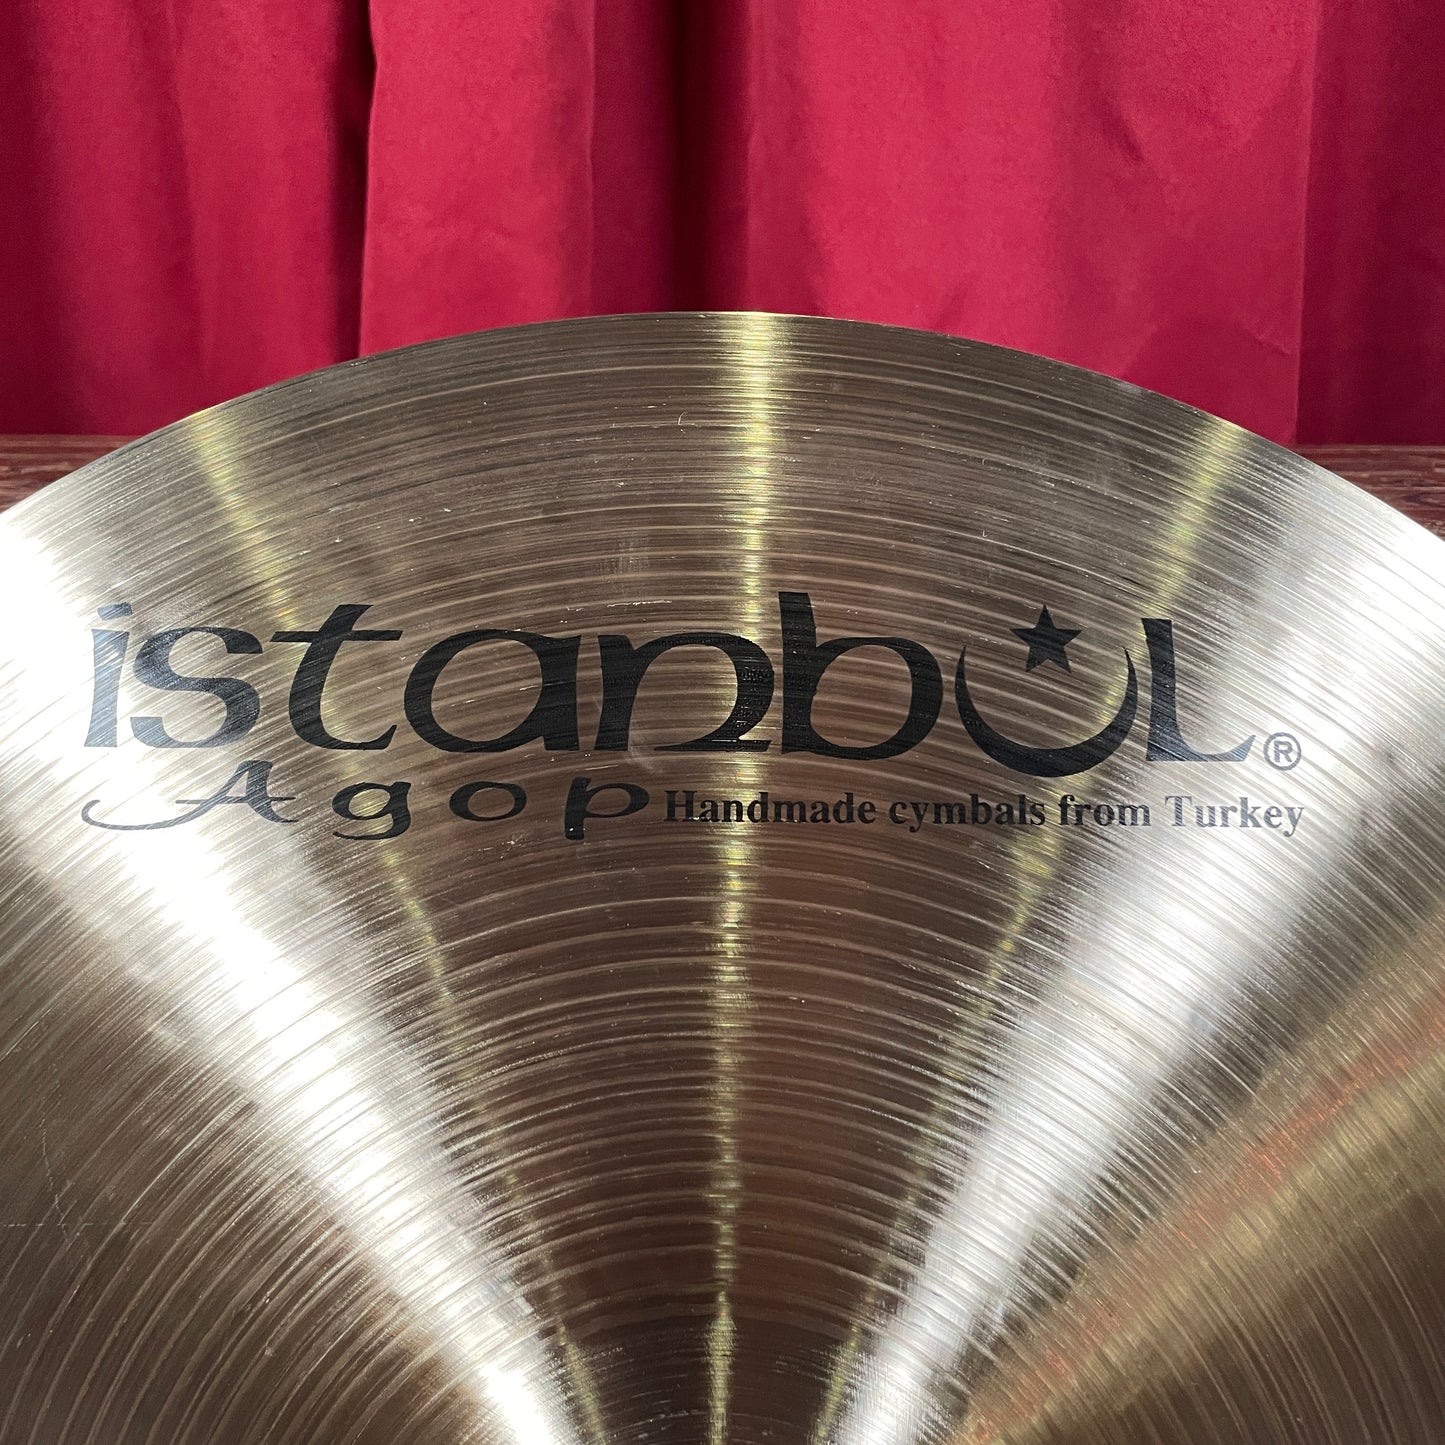 20" Istanbul Agop Traditional Dark Crash Cymbal 1712g *Video Demo*